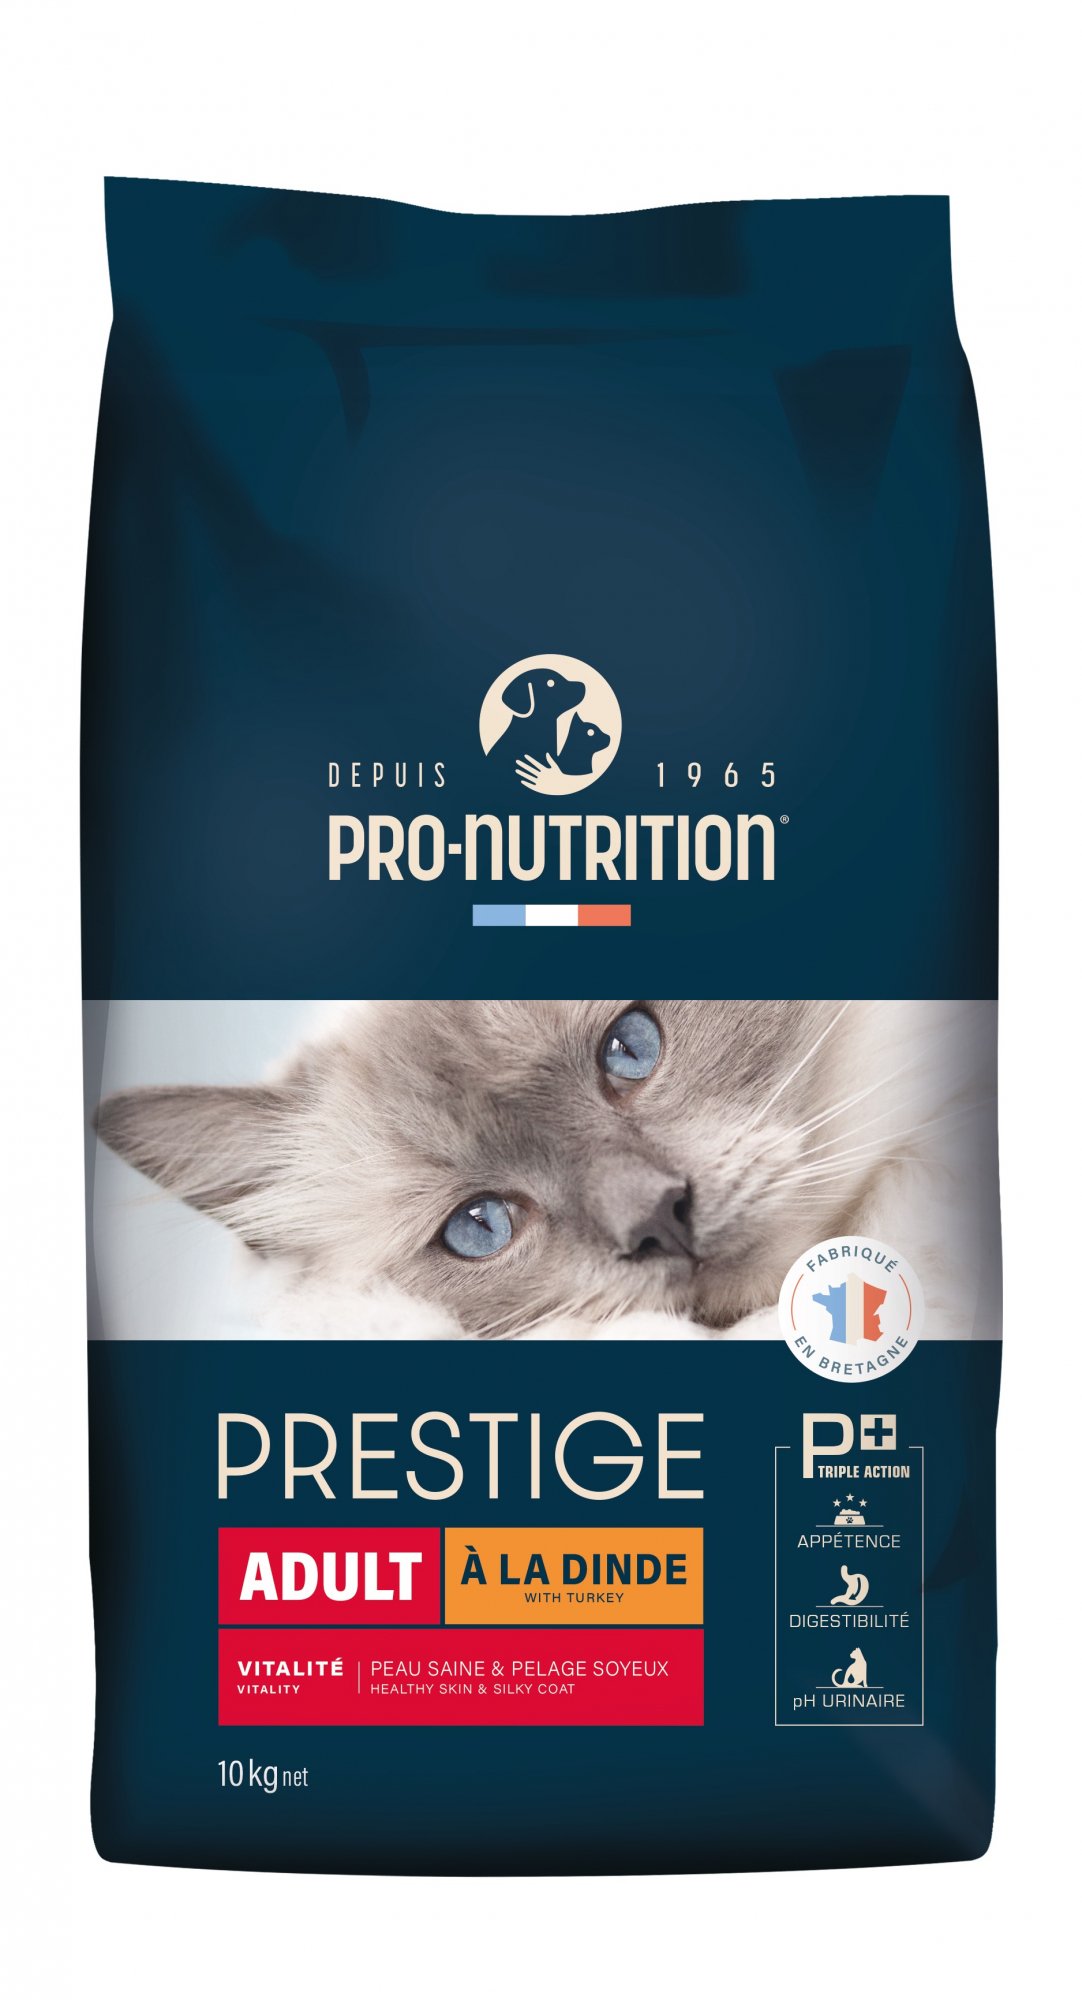 PRO-NUTRITION Flatazor CROCKTAIL Adult Pienso con pavo para gatos